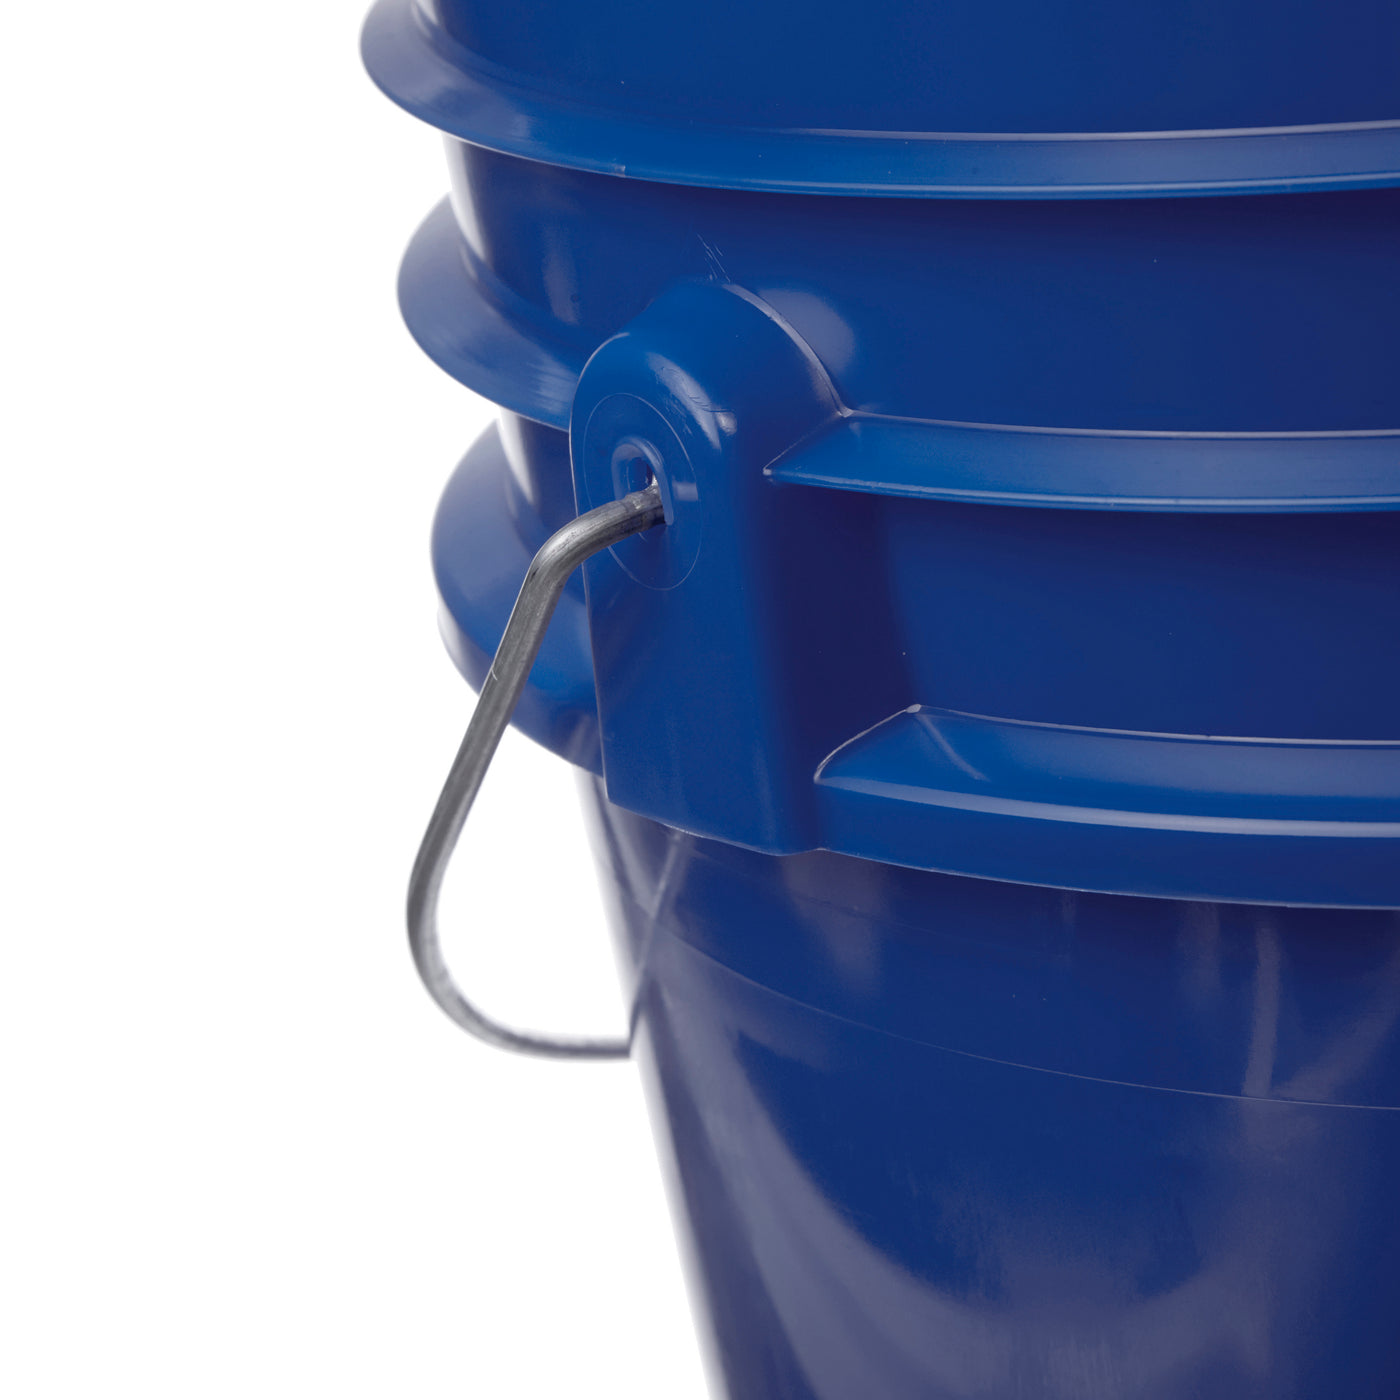 5 Gallon Plastic Bucket, Open Head - Navy Blue